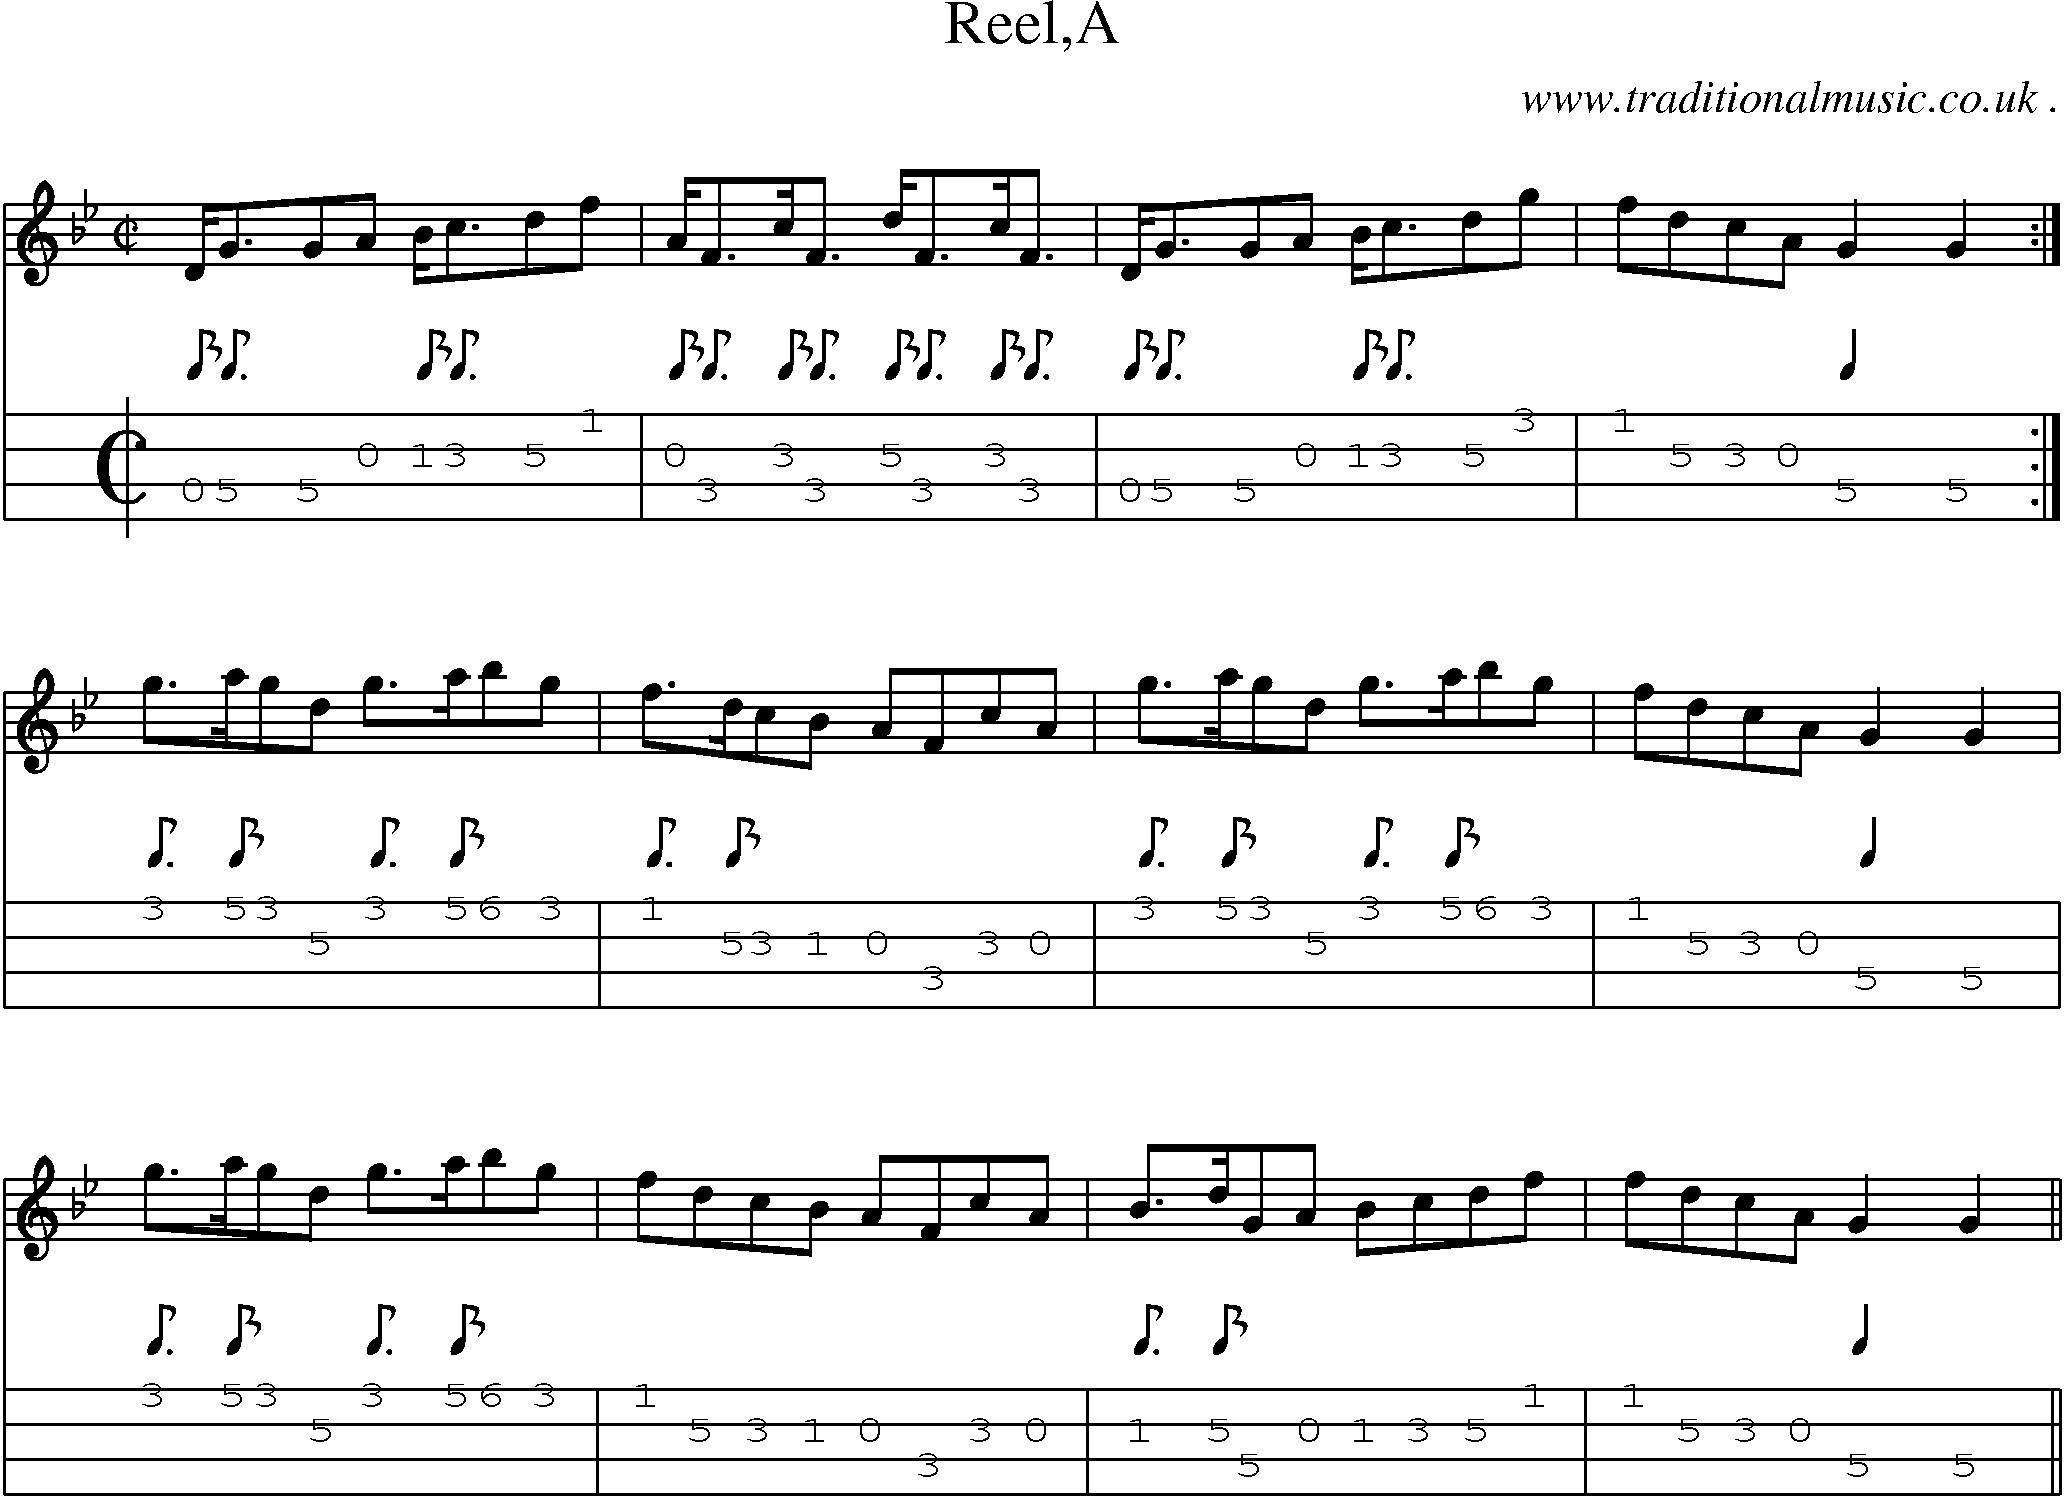 Sheet-Music and Mandolin Tabs for Reela